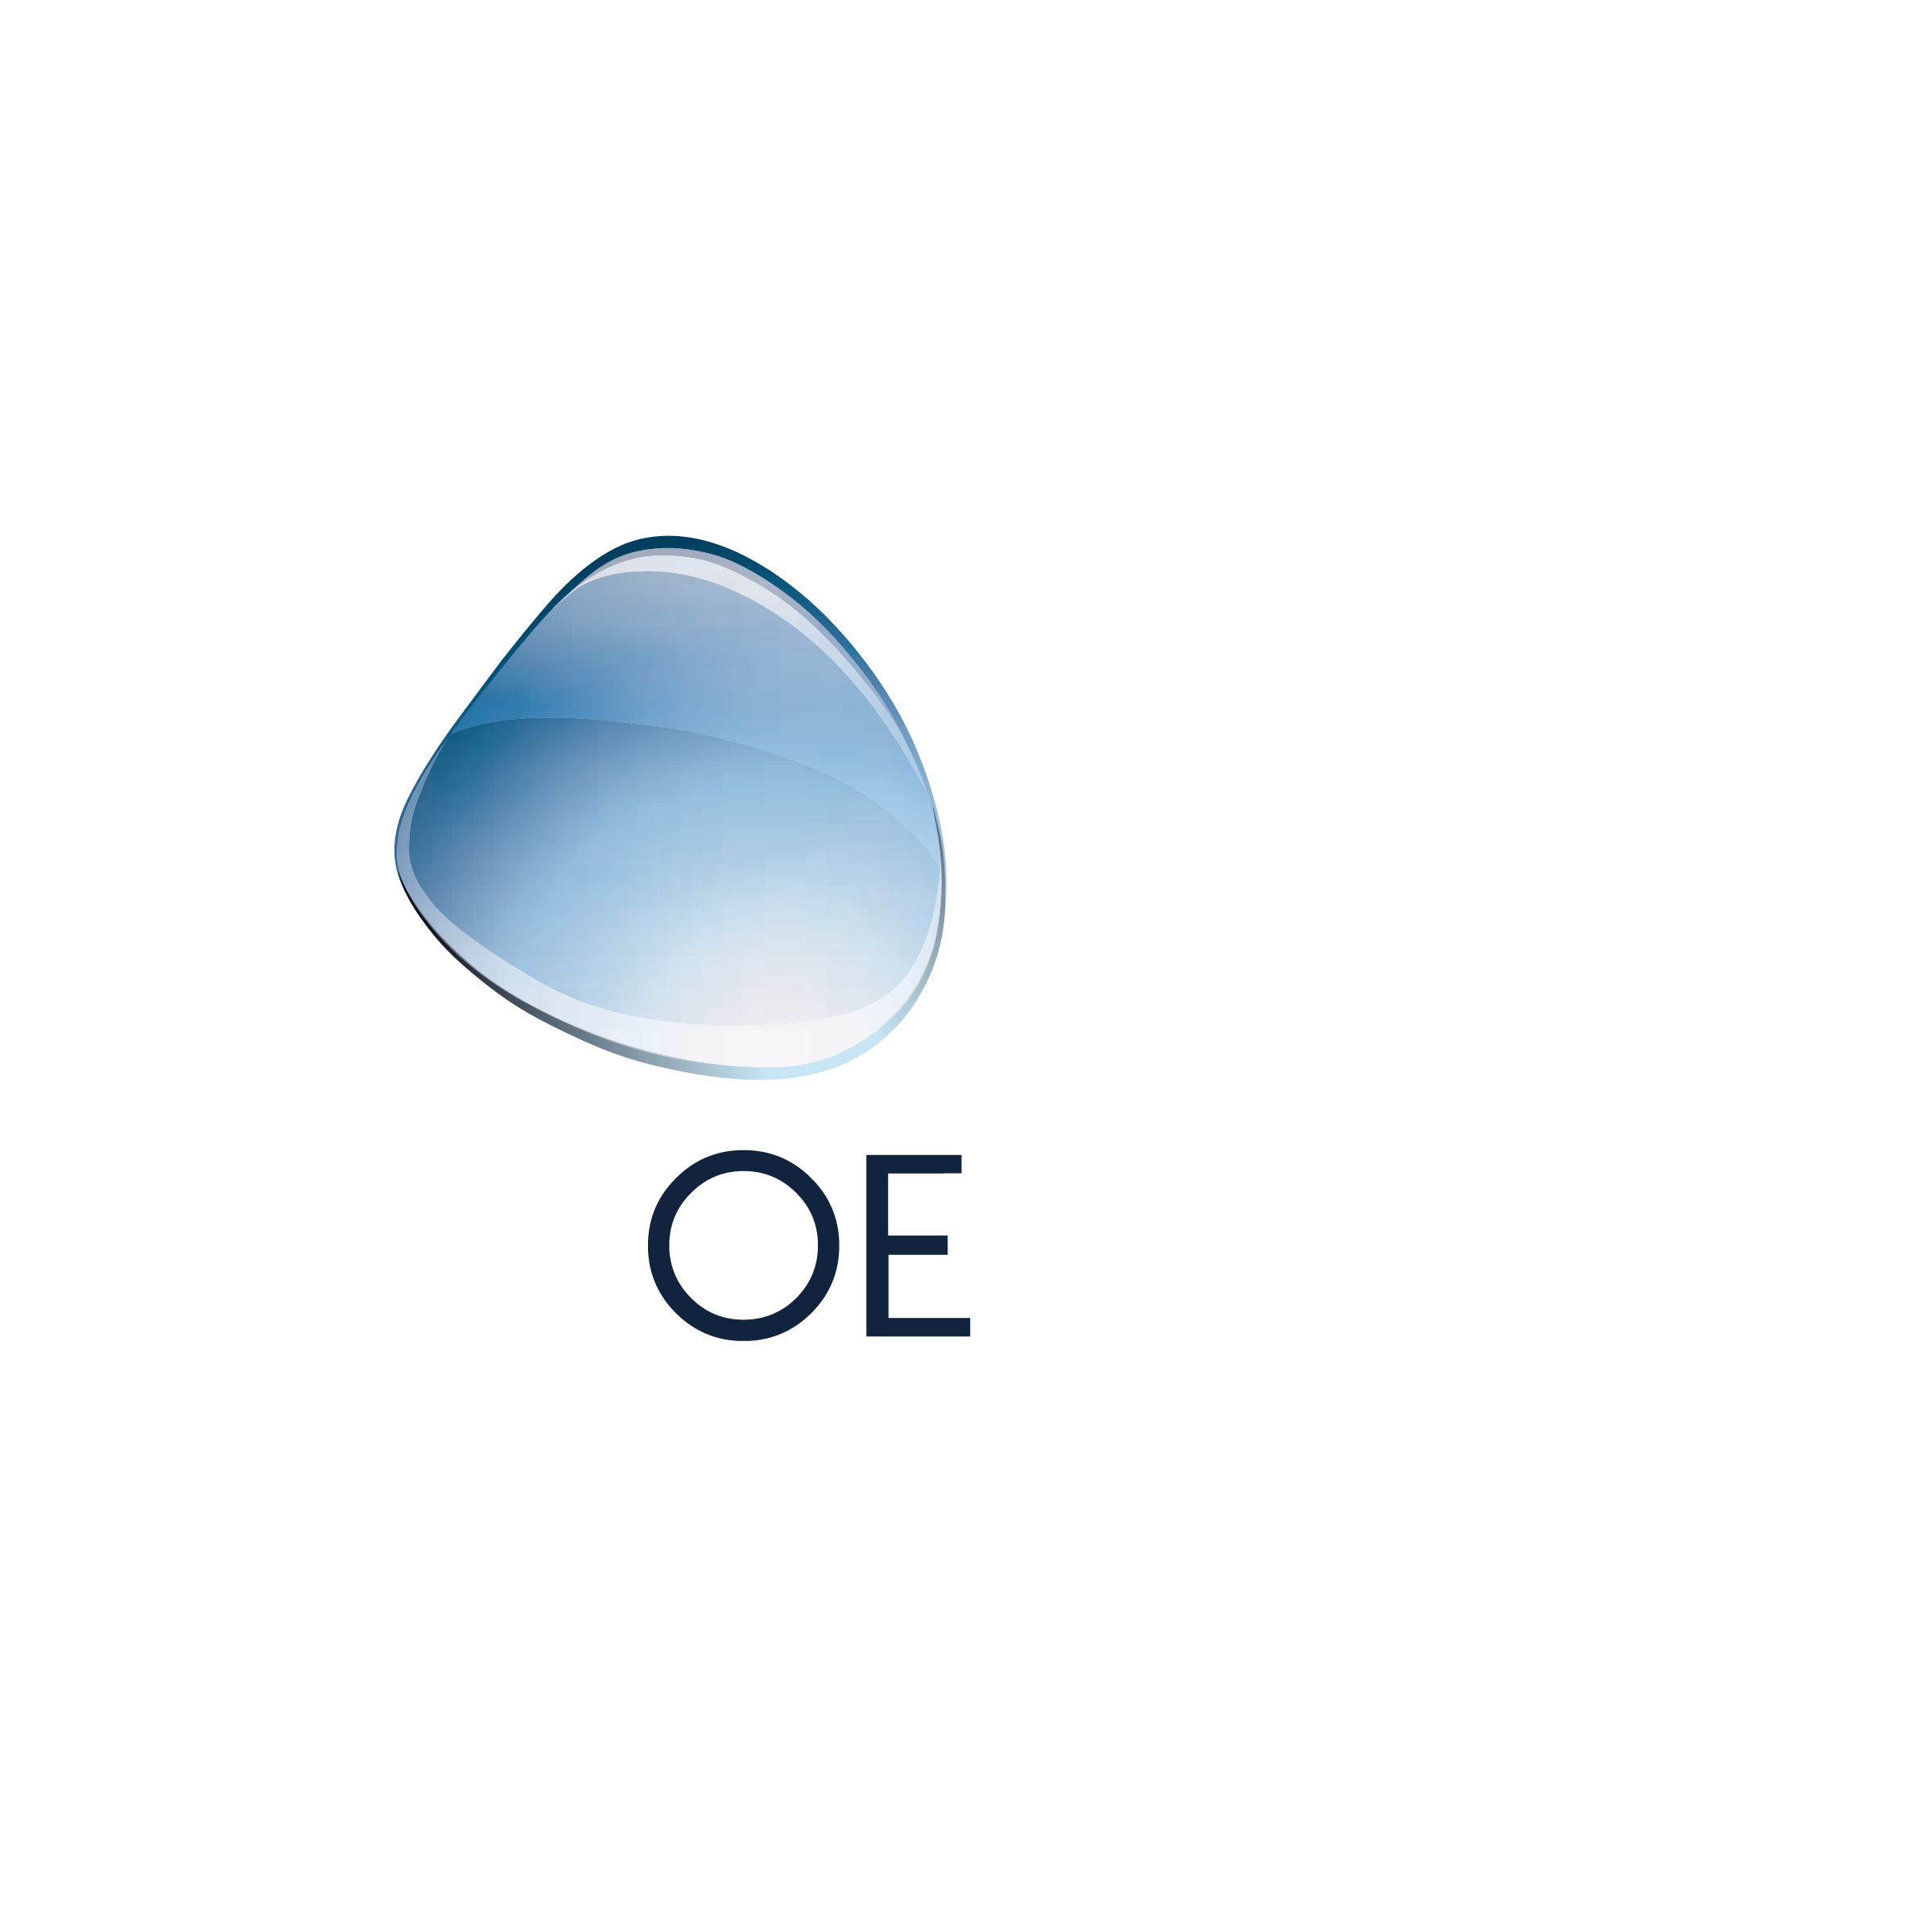 OE Cam Logotype - Designed by Peek Creative